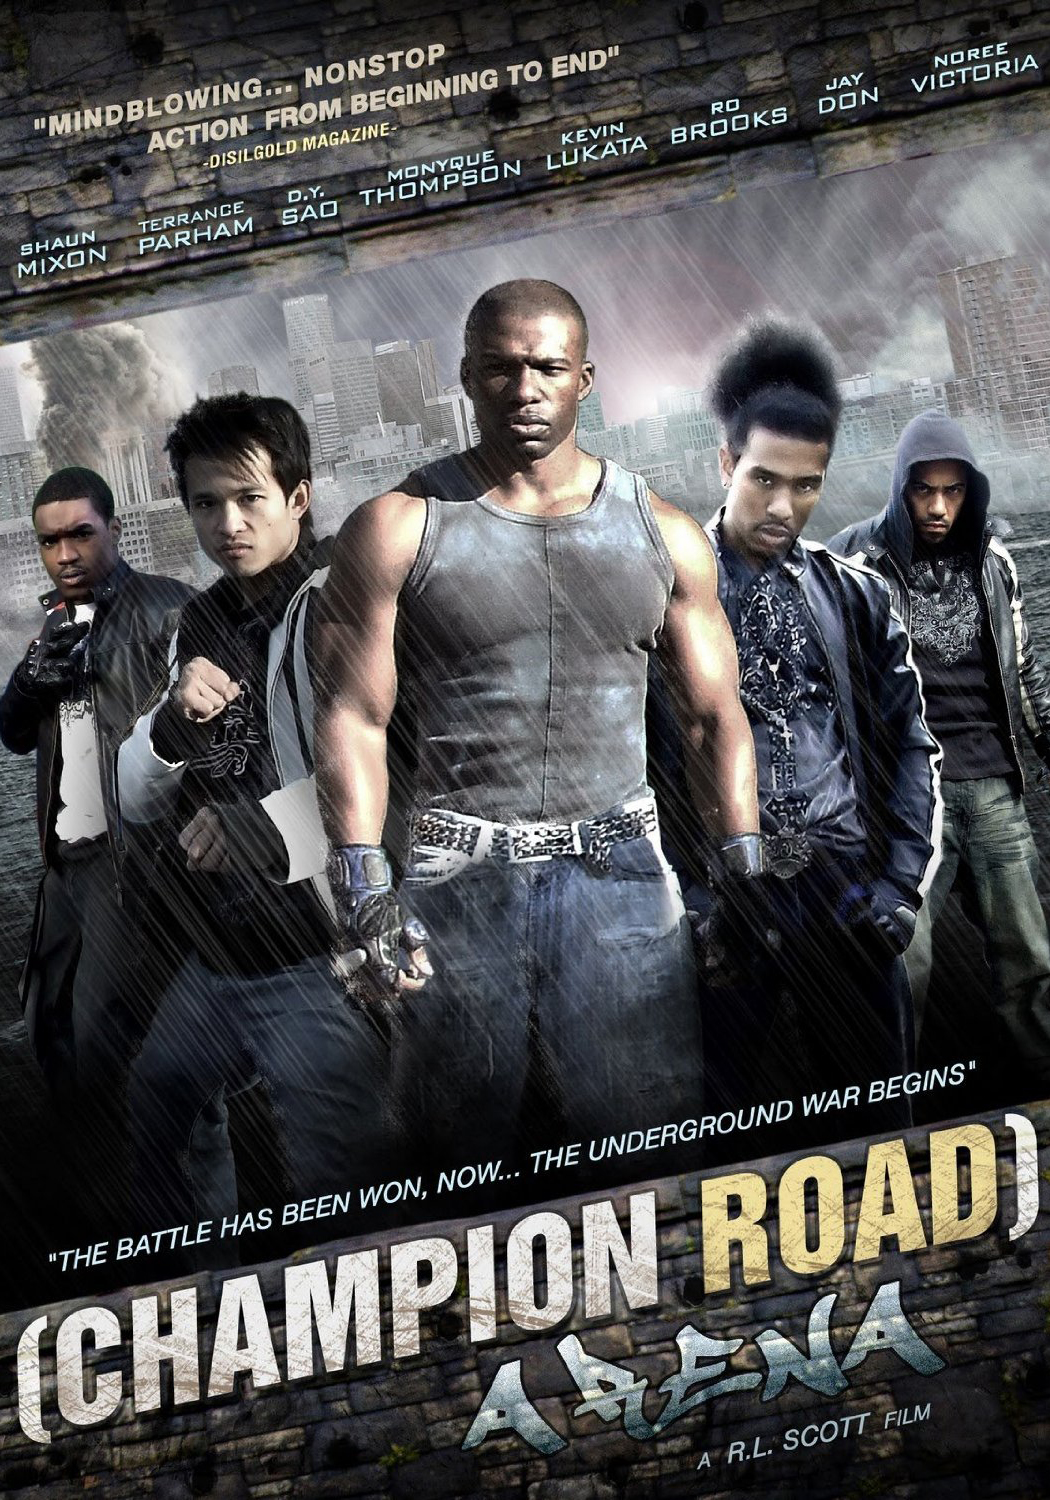 Champion Road: Arena movie